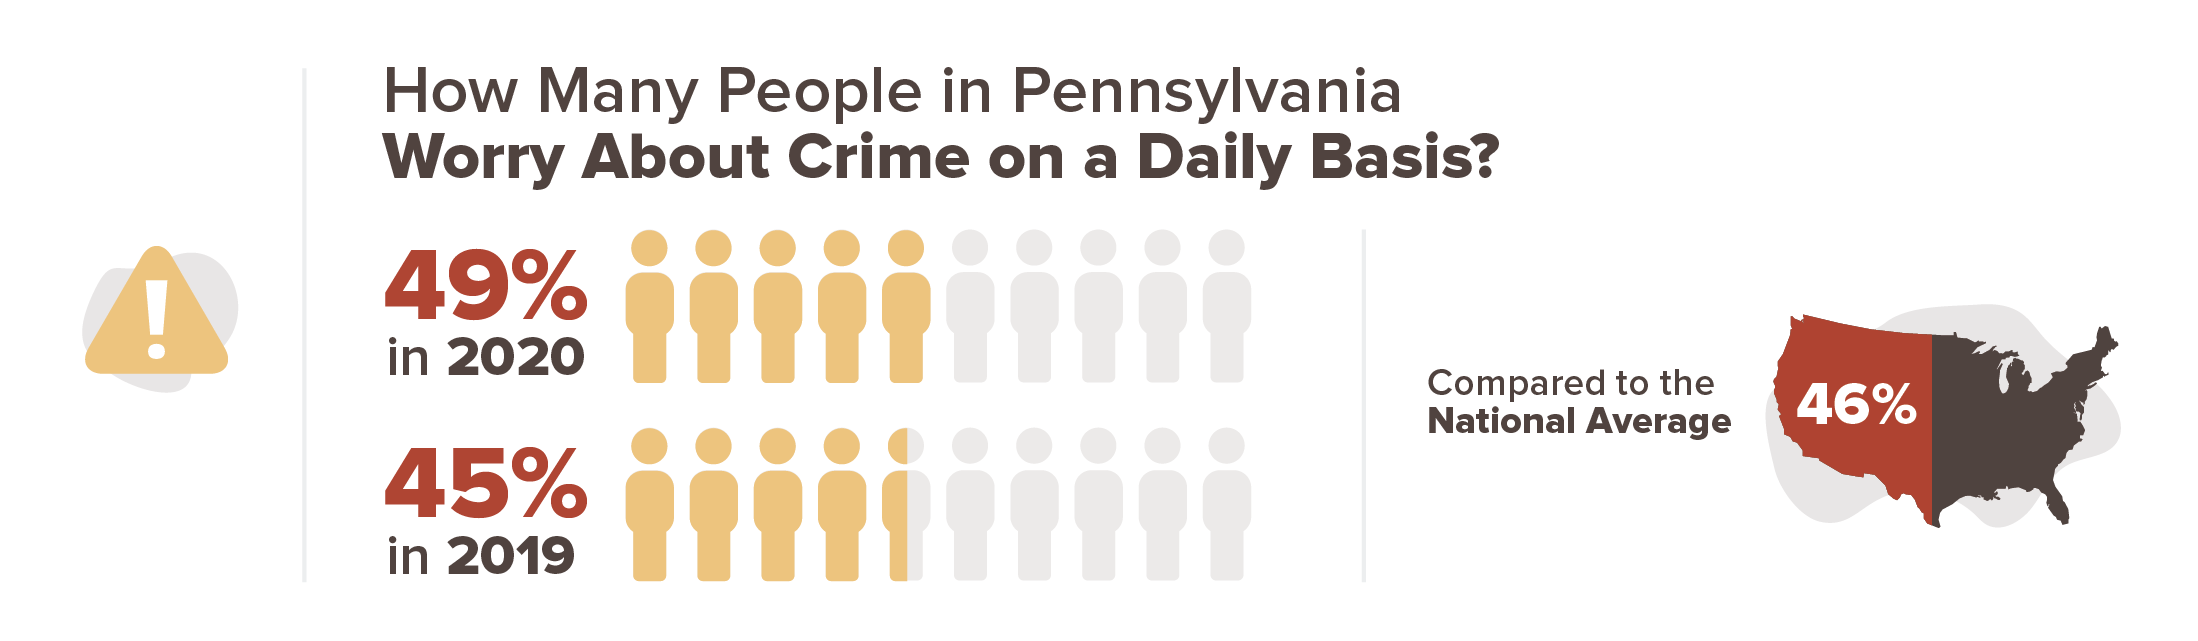 Pennsylvania crime stats infographic